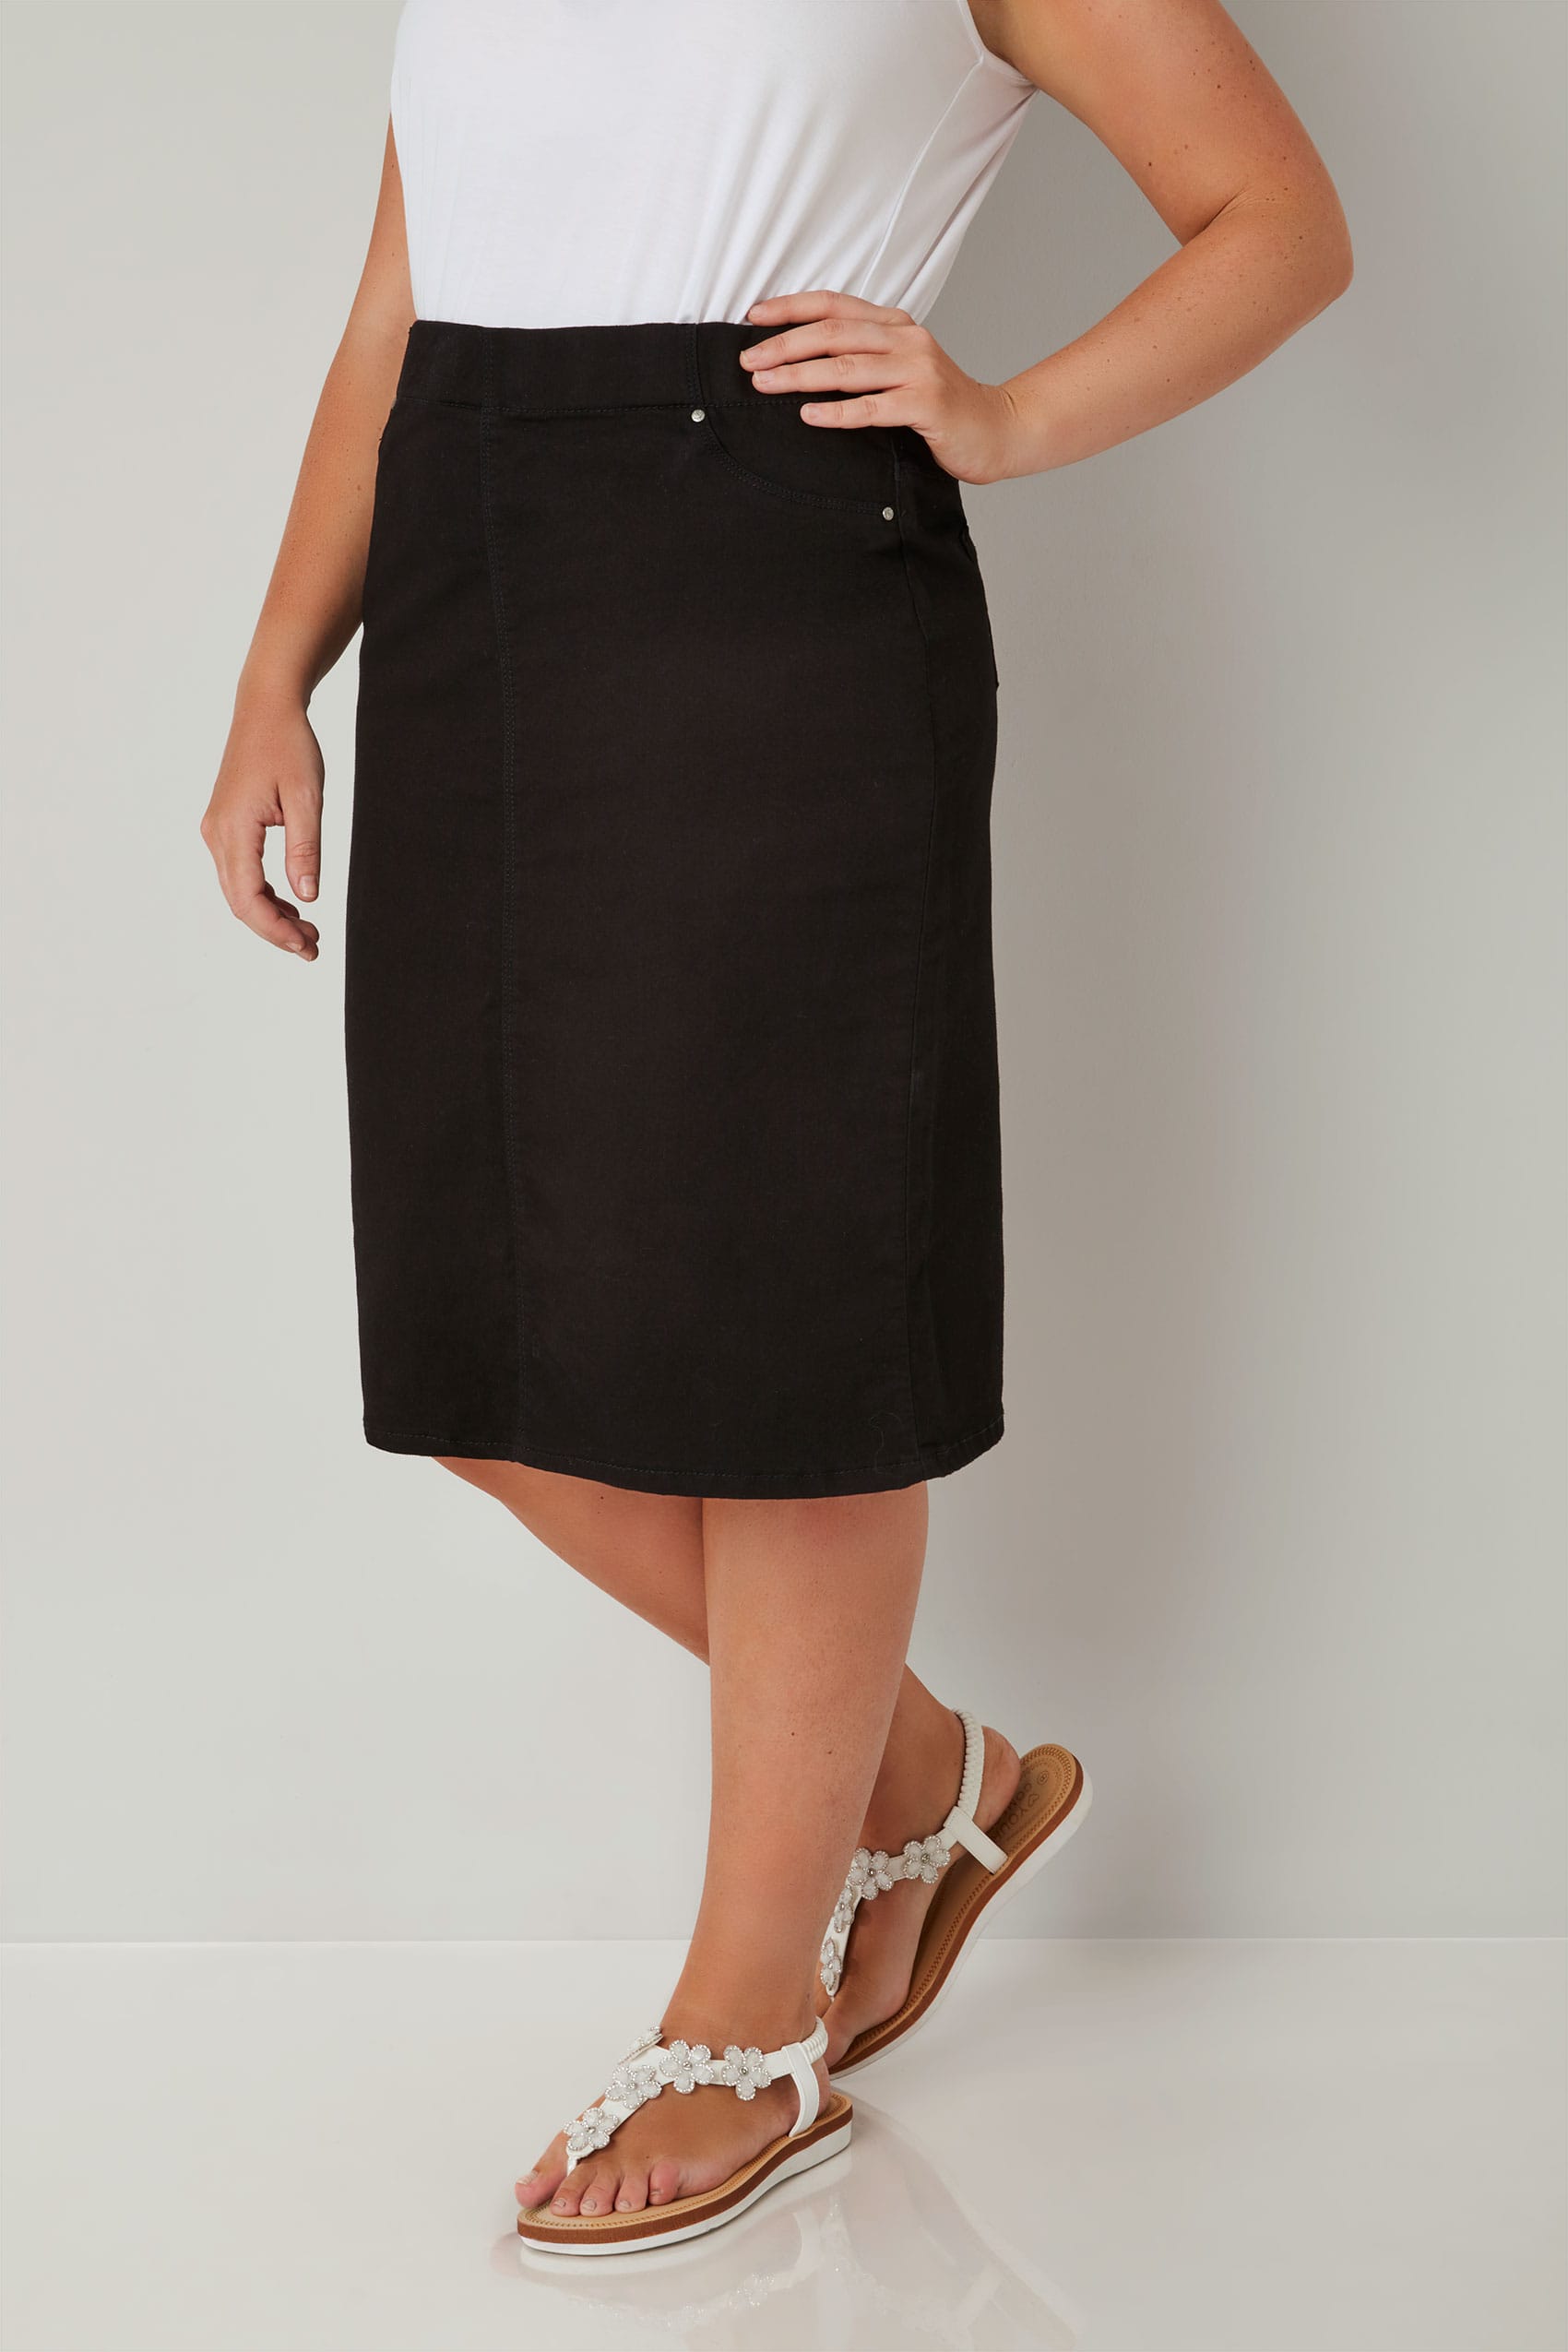 pencil skirt black tights black flats